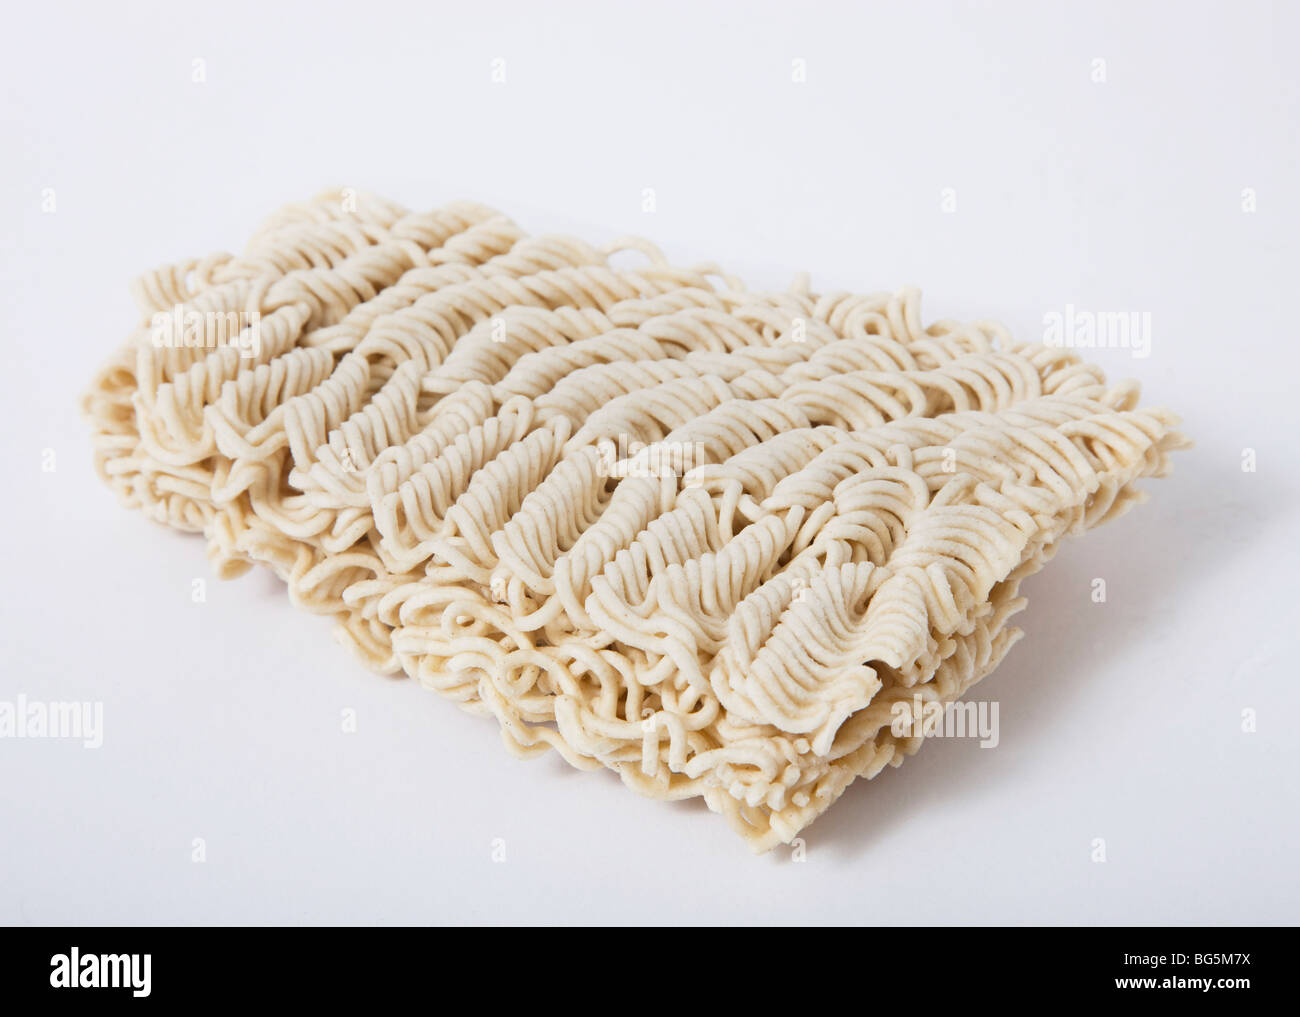 super noodles dried Stock Photo